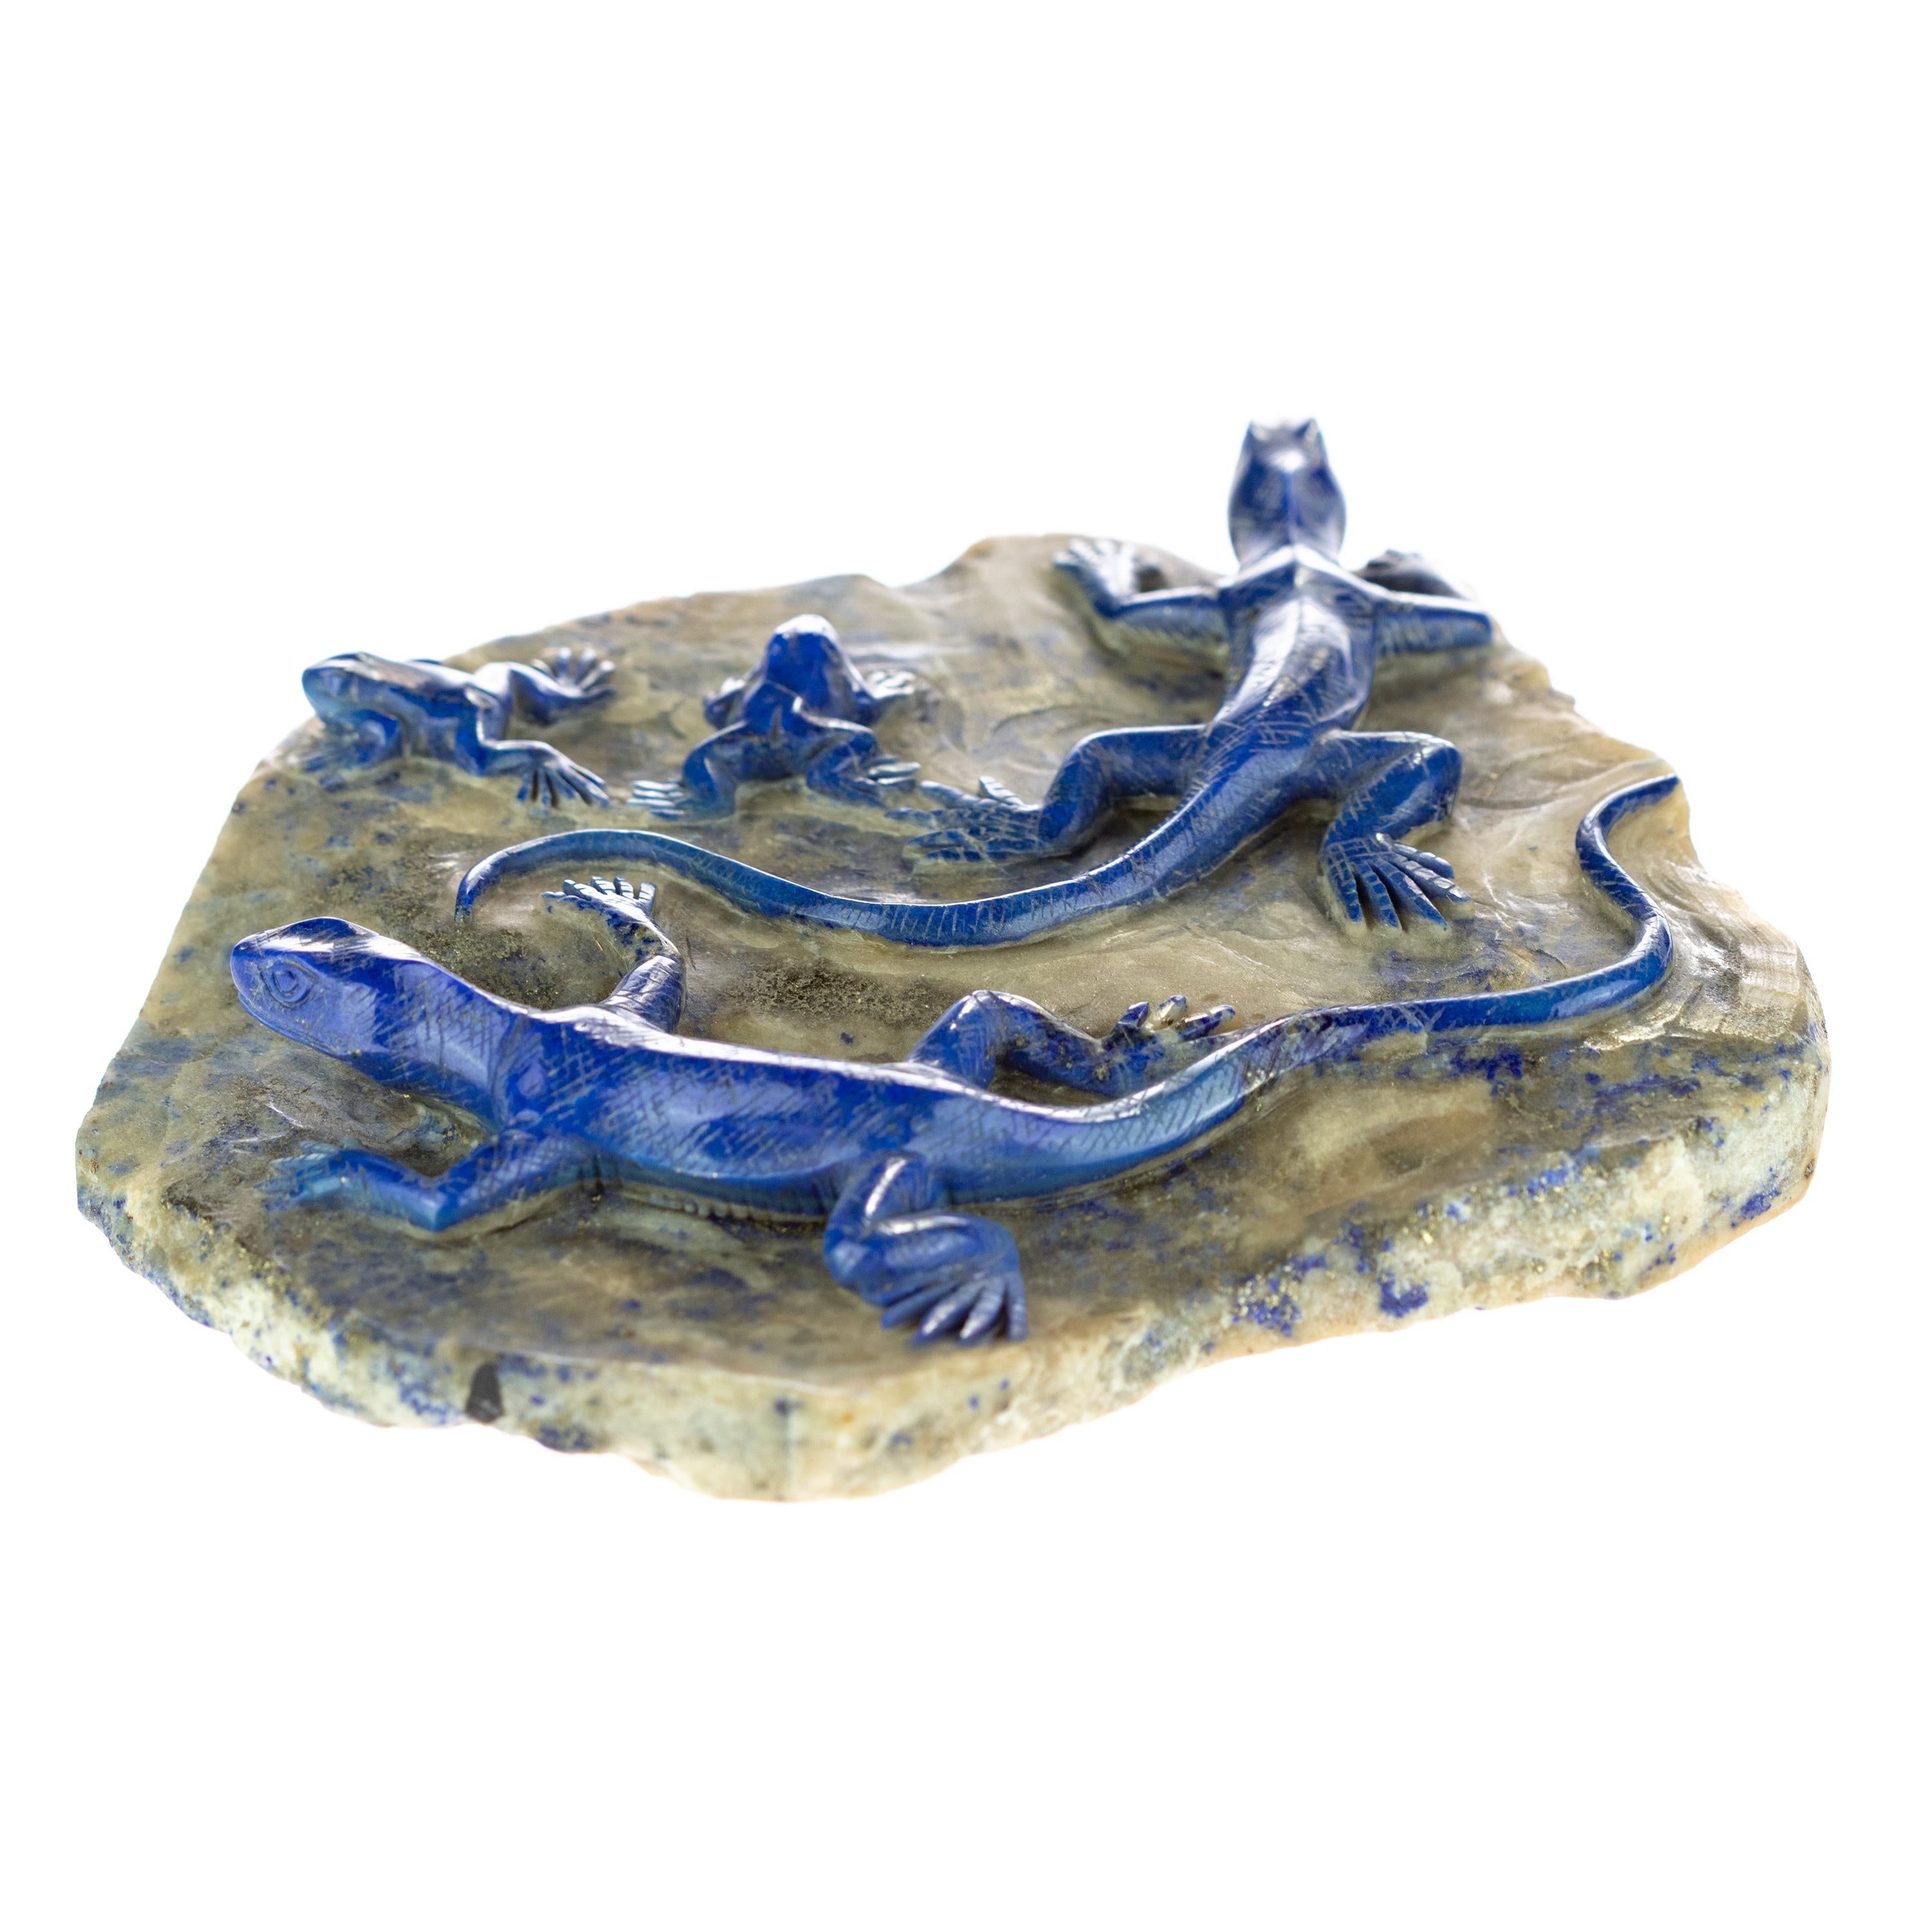 Hong Kong Lapis Lazuli Blue Family of Lizard Carved Animal Artisanal Statue Sculpture For Sale